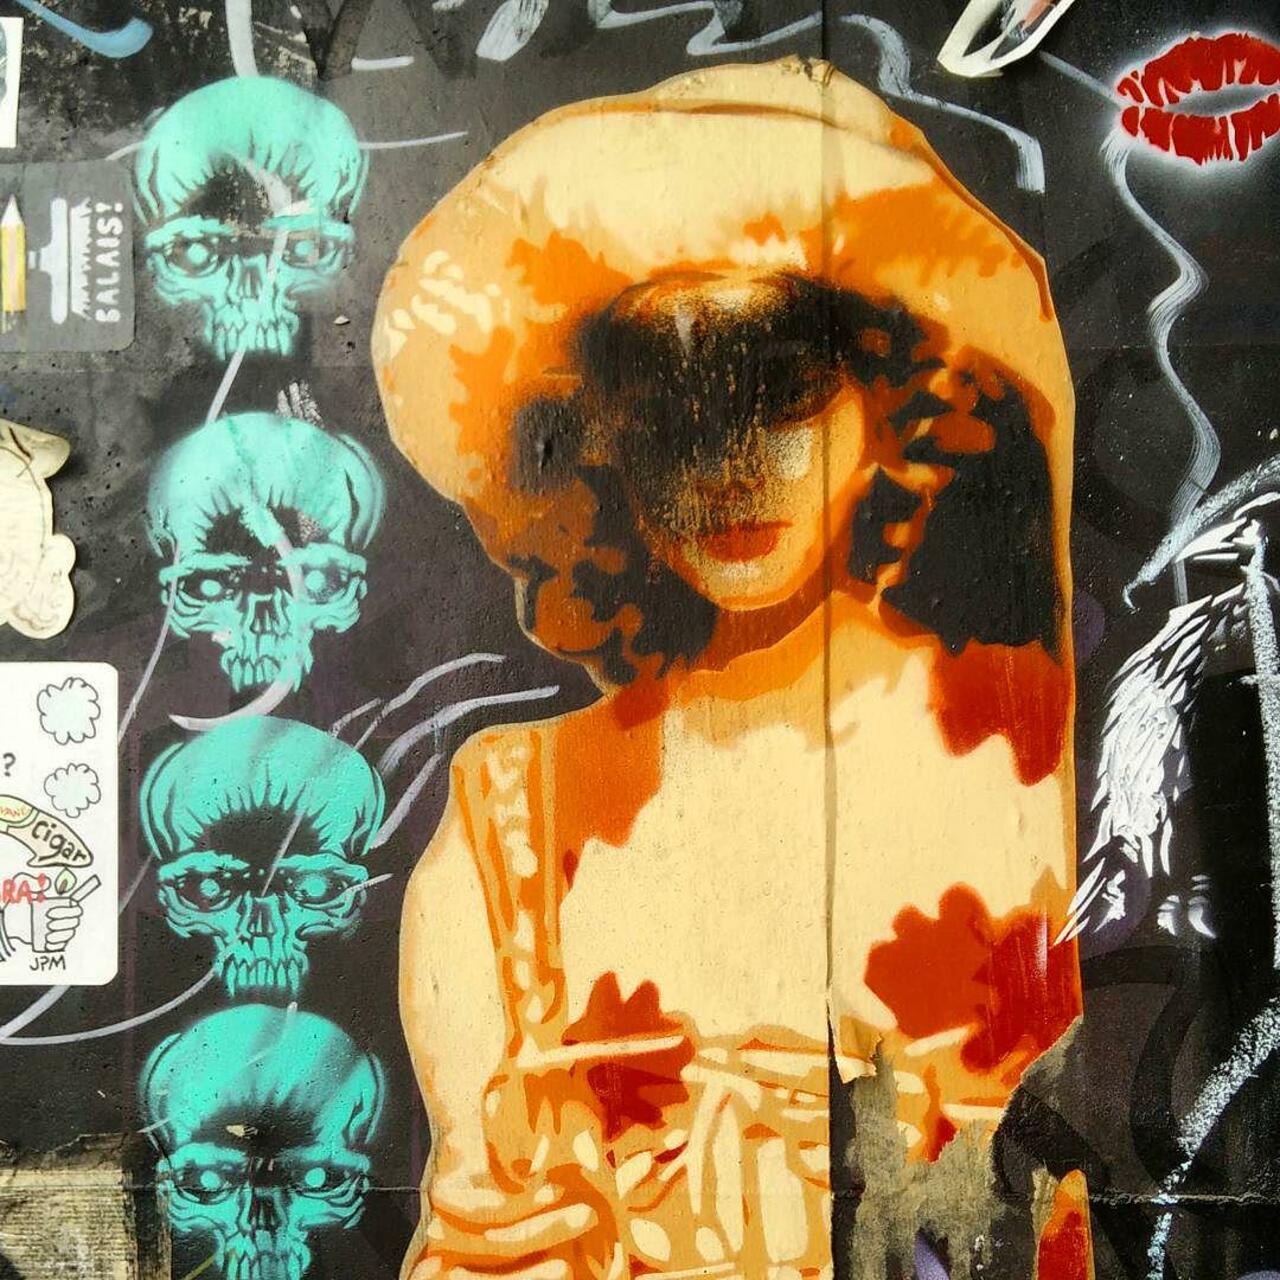 #Paris #graffiti photo by @ceky_art http://ift.tt/1OIIxpp #StreetArt http://t.co/5yHlINhwfs